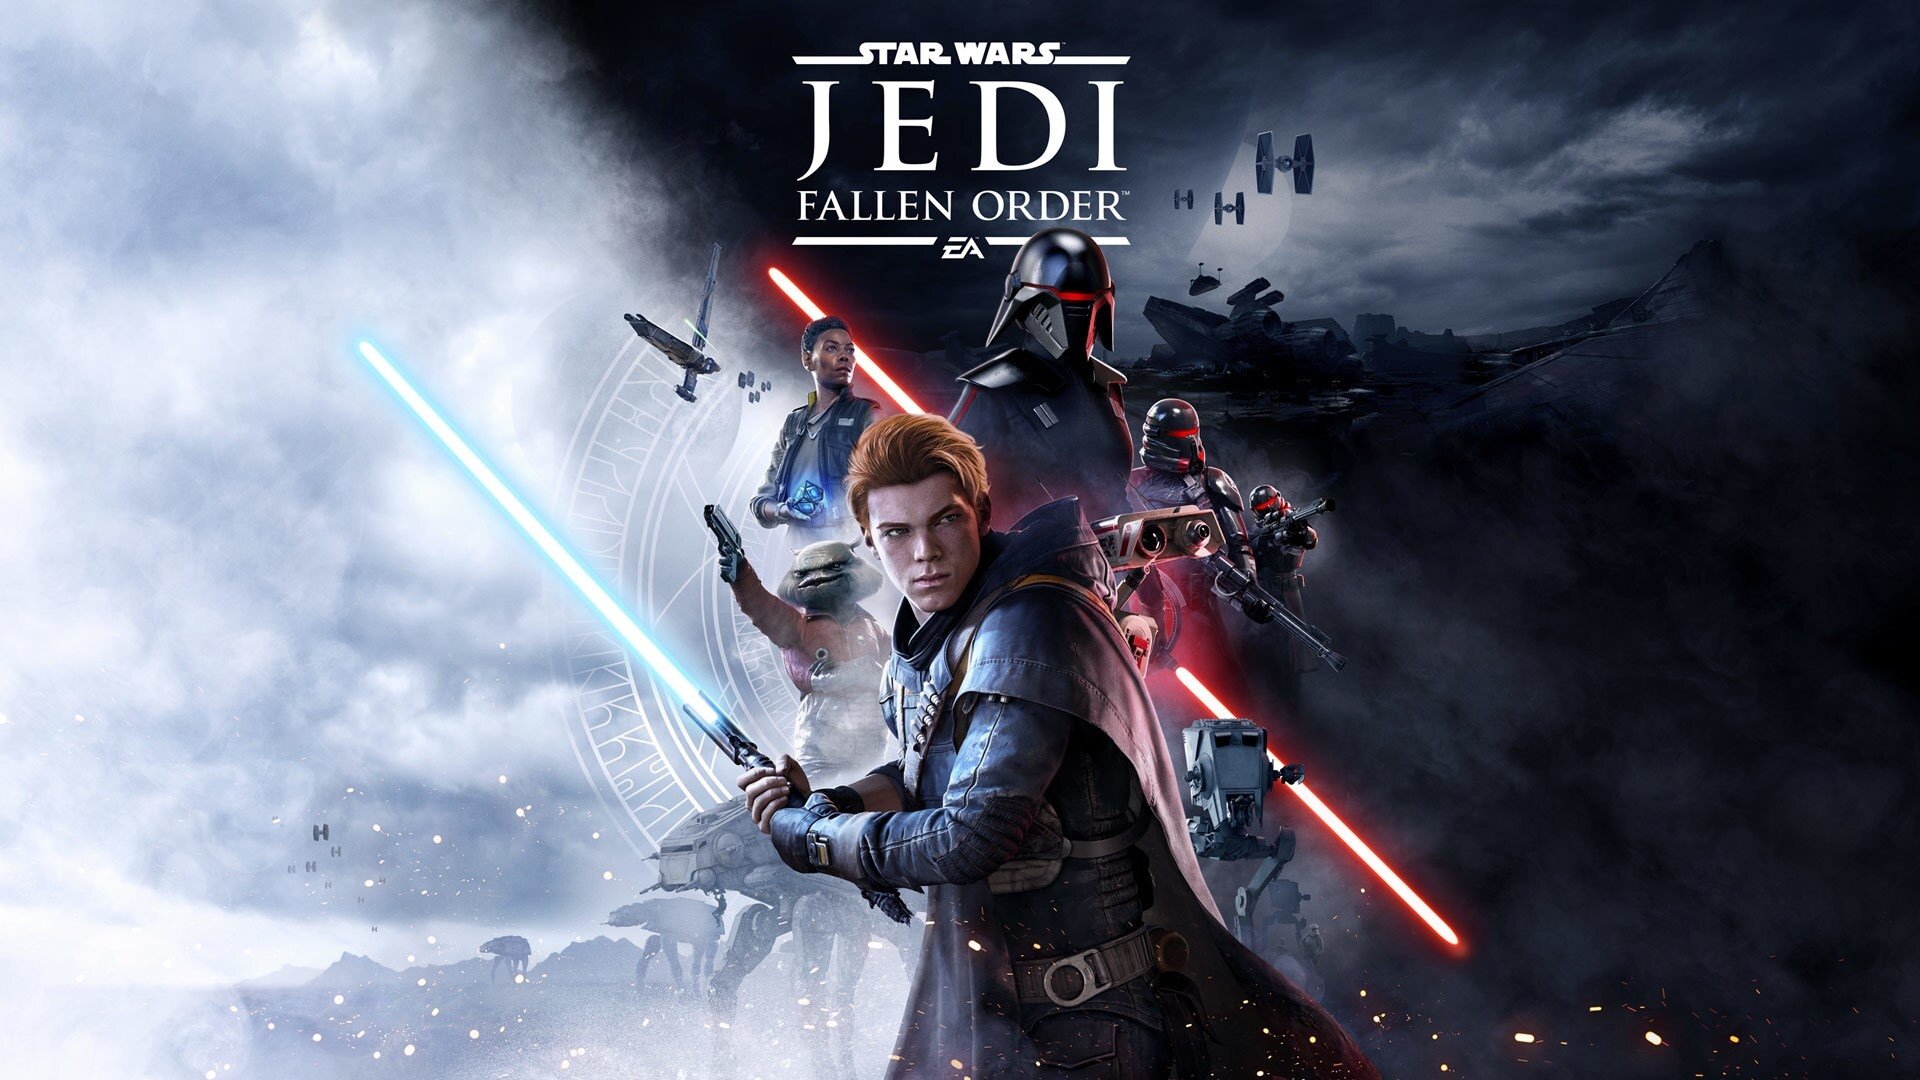 REVIEW: Star Wars Jedi: Fallen Order, a simple but fun galactic tour